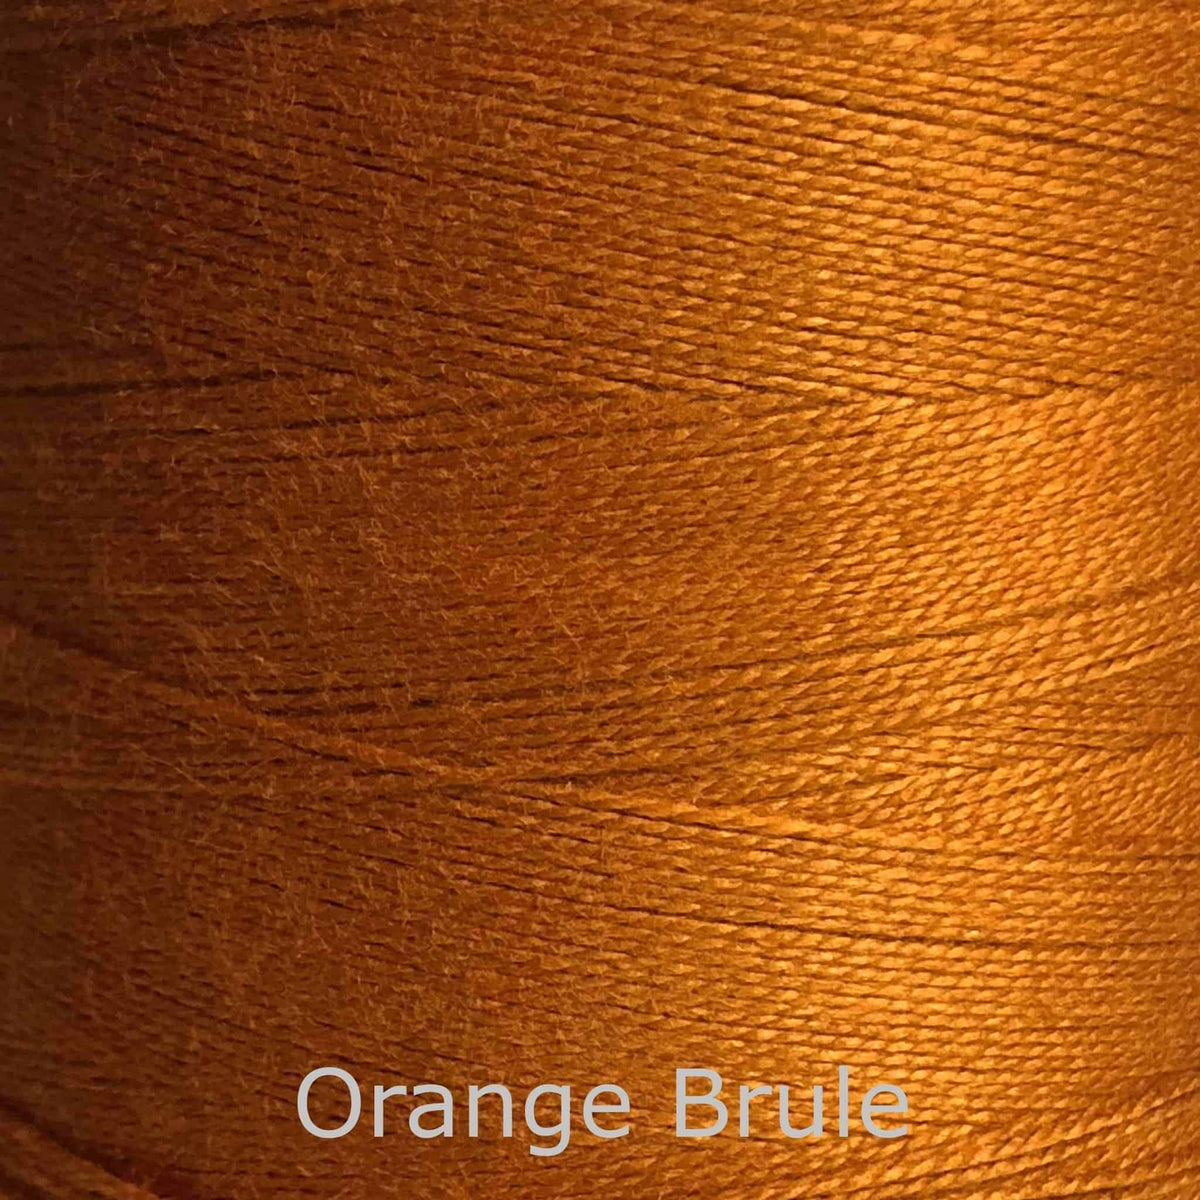 Maurice Brassard Boucle Cotton Orange Brulee